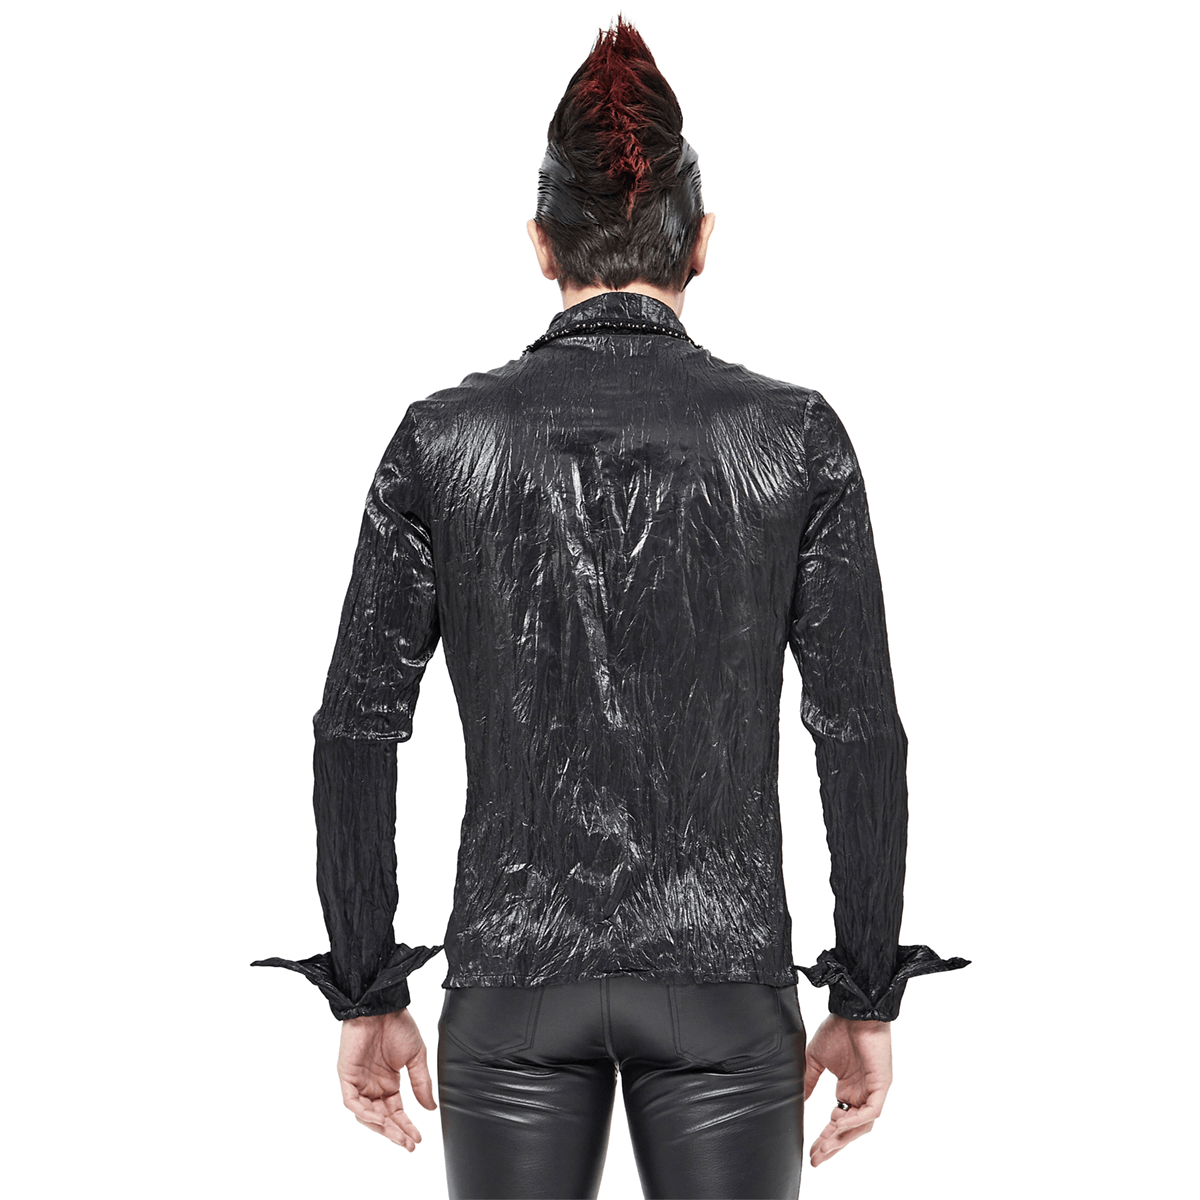 Punk Rock Style Male Black Long-sleeved Shirt / Alternative style Clothing for Men - HARD'N'HEAVY